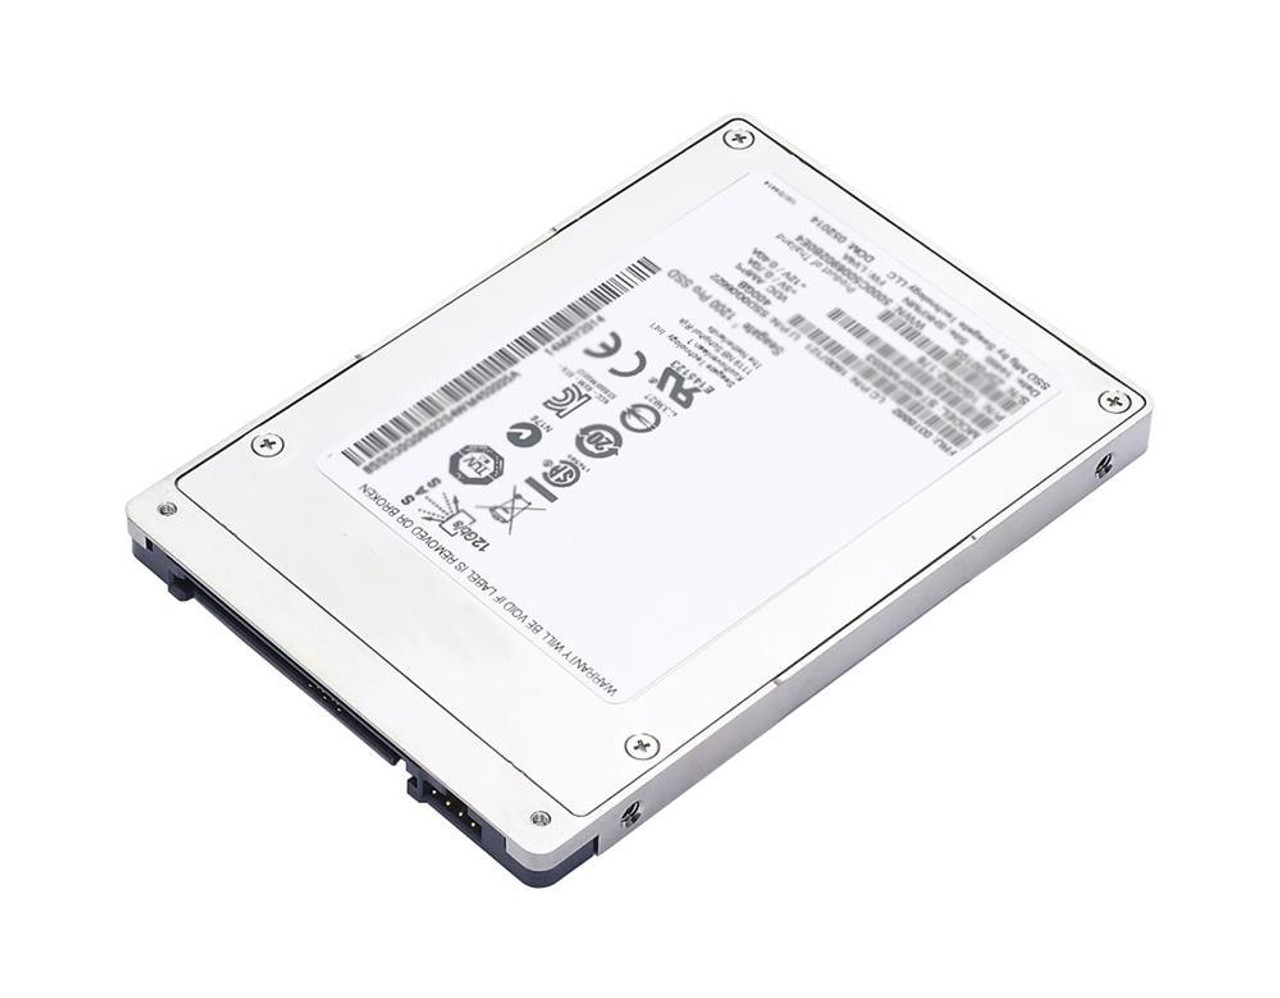 SSD320 IBM 160GB MLC SATA 3Gbps 2.5-inch Internal Solid State Drive (SSD)